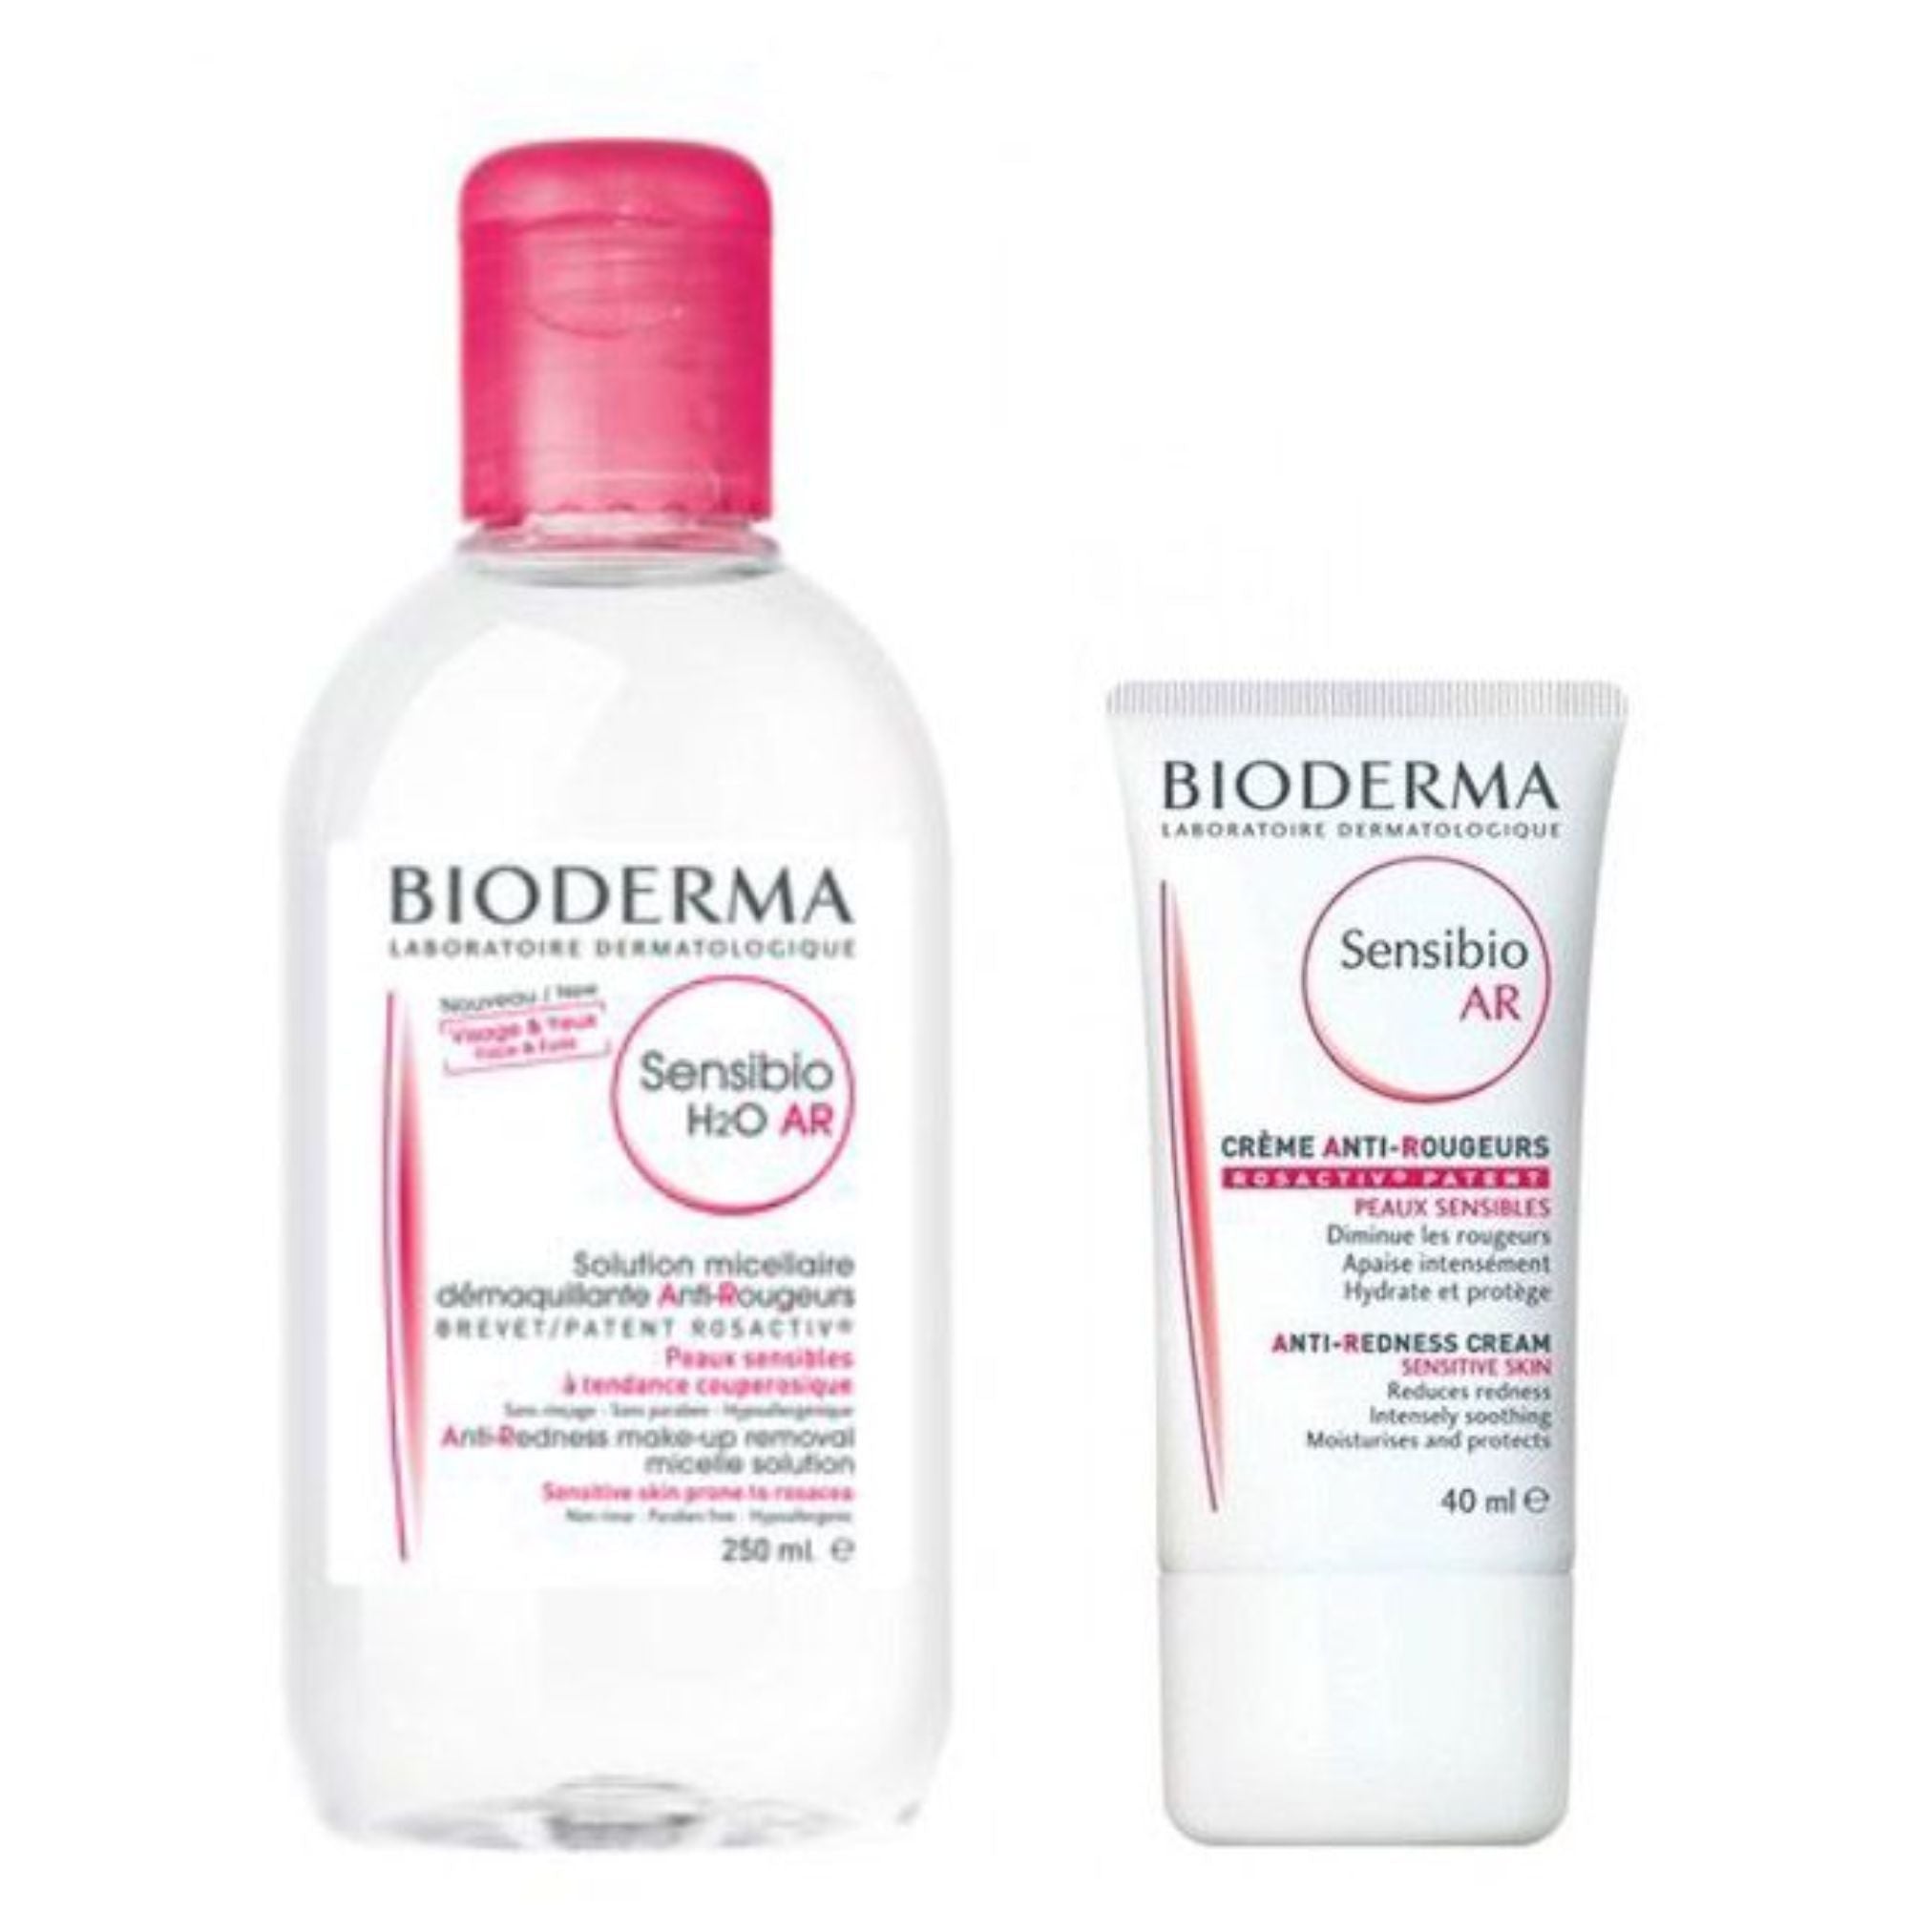 Bioderma Promo Pack: Bioderma Sensibio AR 40ml + Bioderma Sensibio AR Micelle Solution 250ml